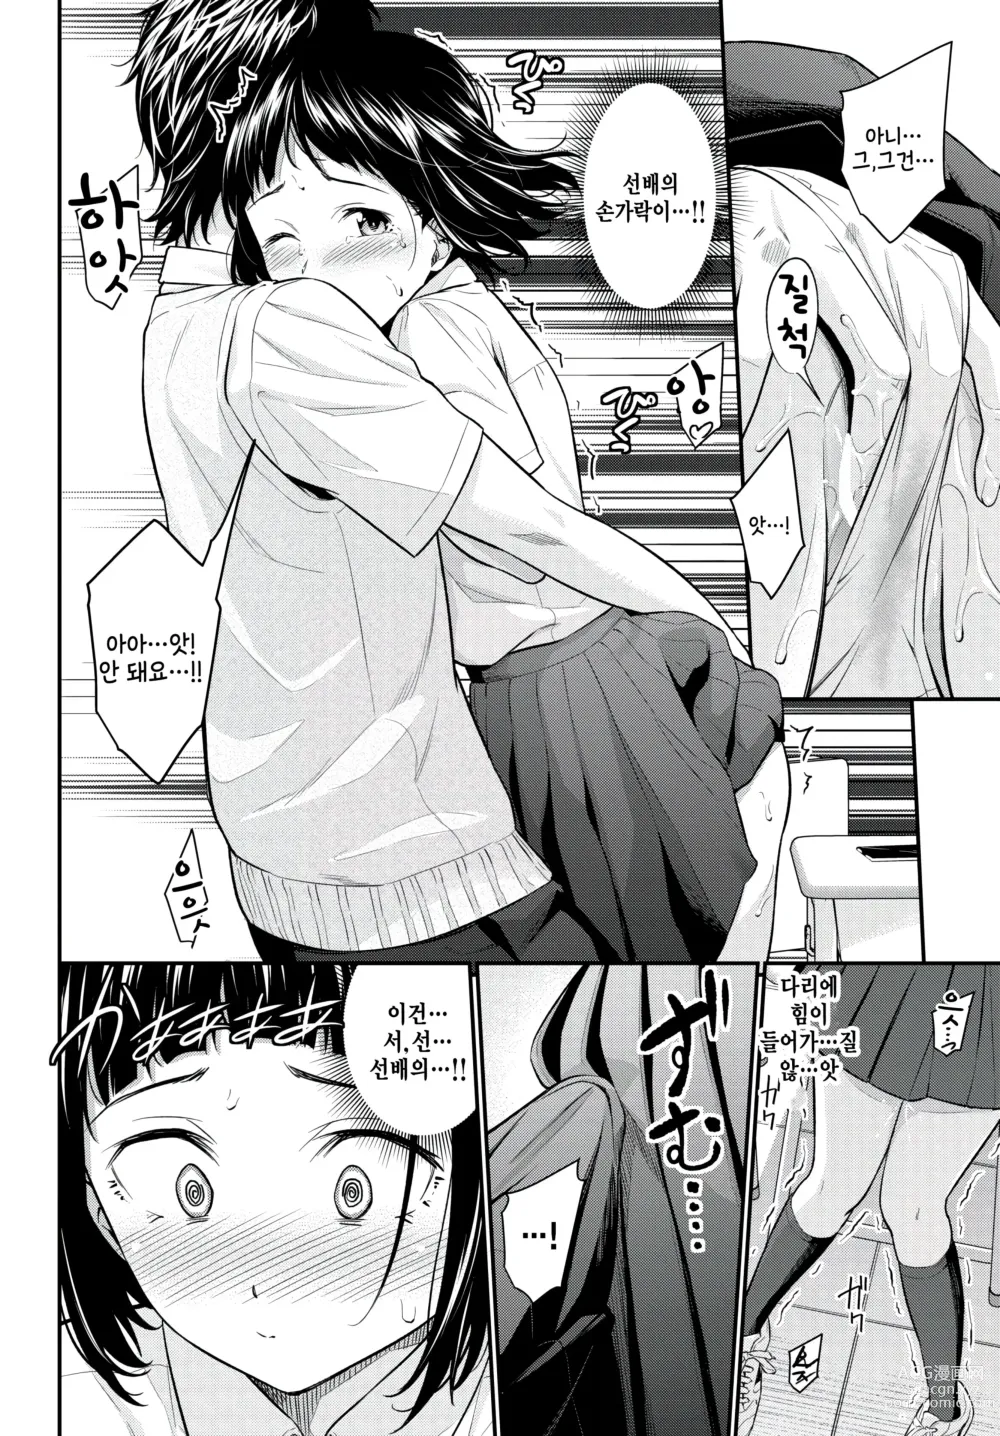 Page 8 of manga Kakushigoto